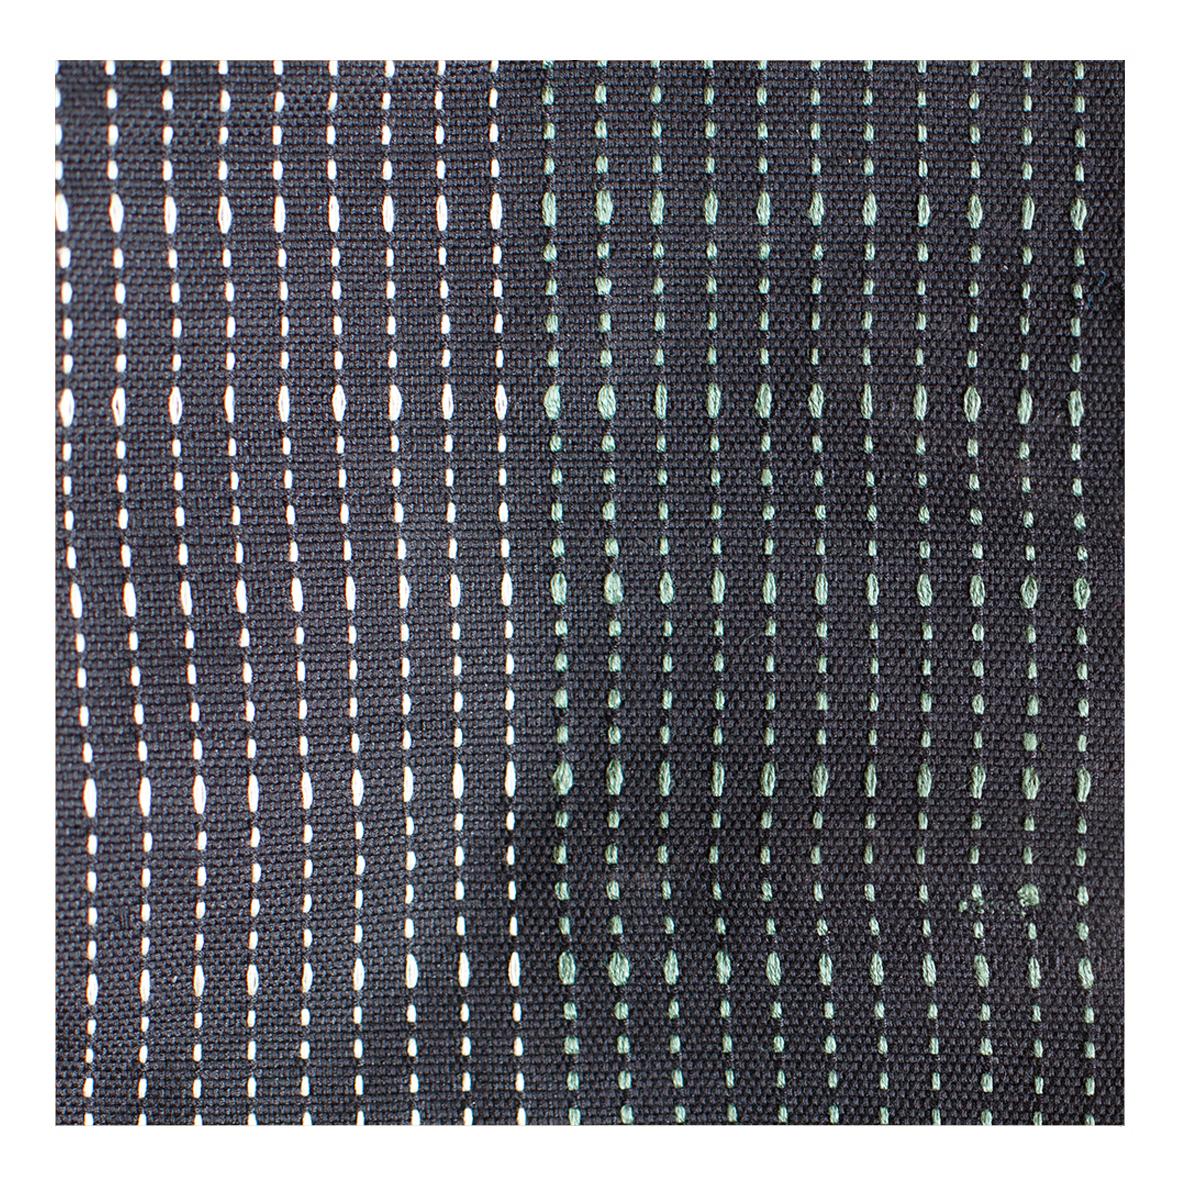 Bauhaus Contemporary Ethnic Large Textured Cushion Handwoven Cotton Kente Black Green